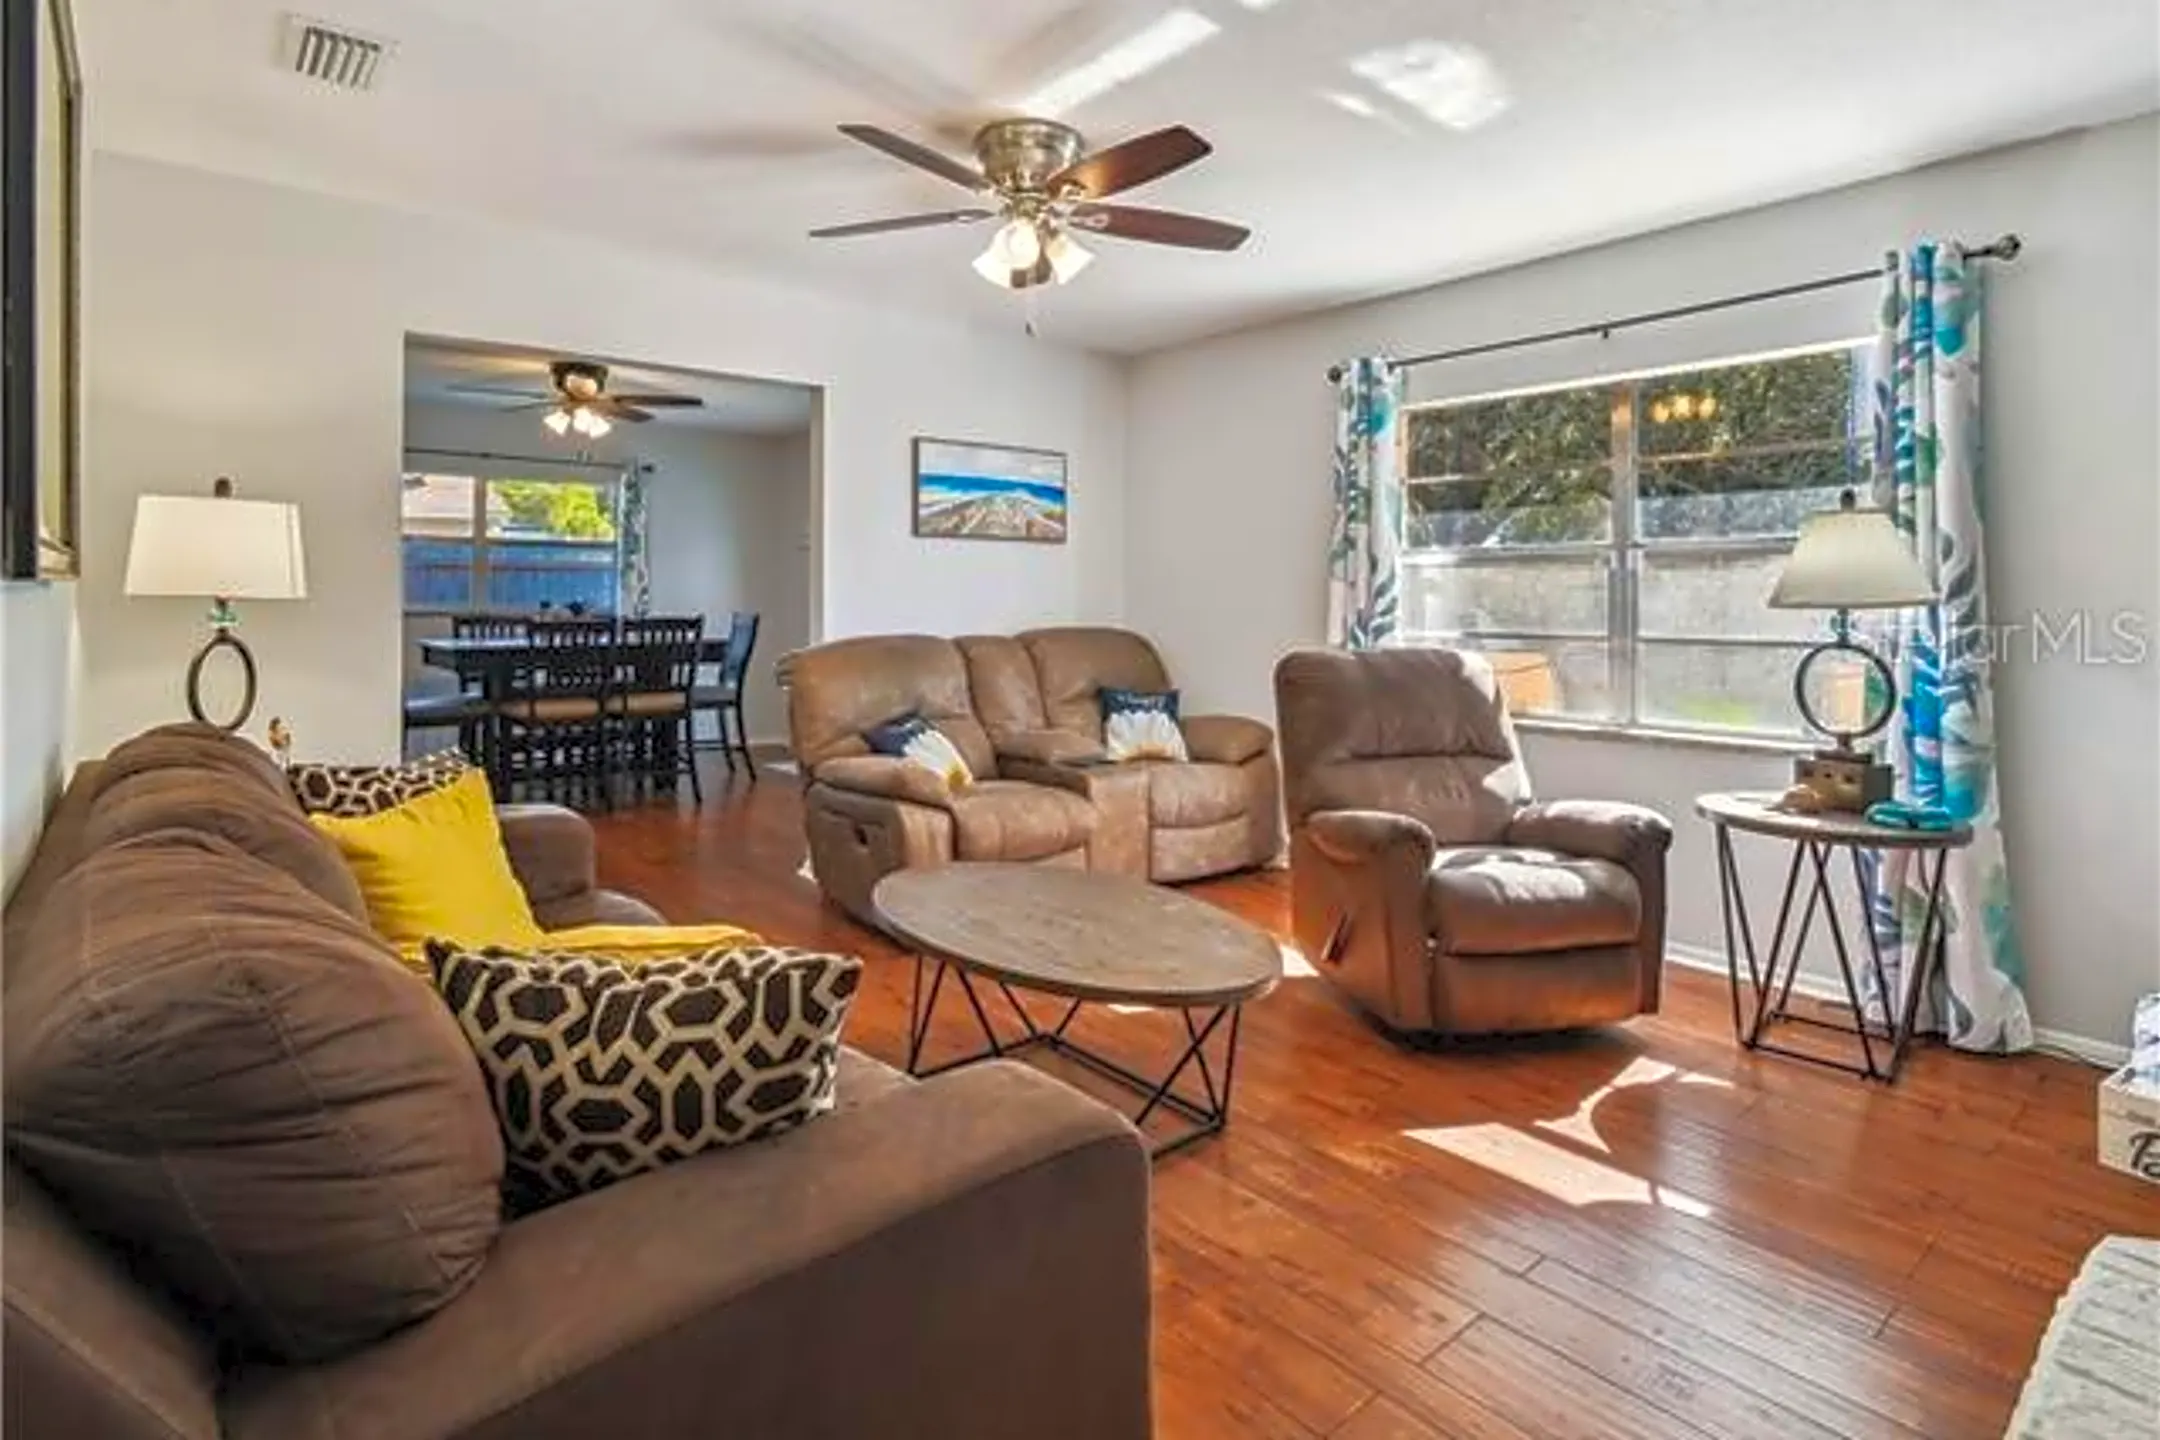 Living Room - 1510 Illinois Ave - Palm Harbor, FL